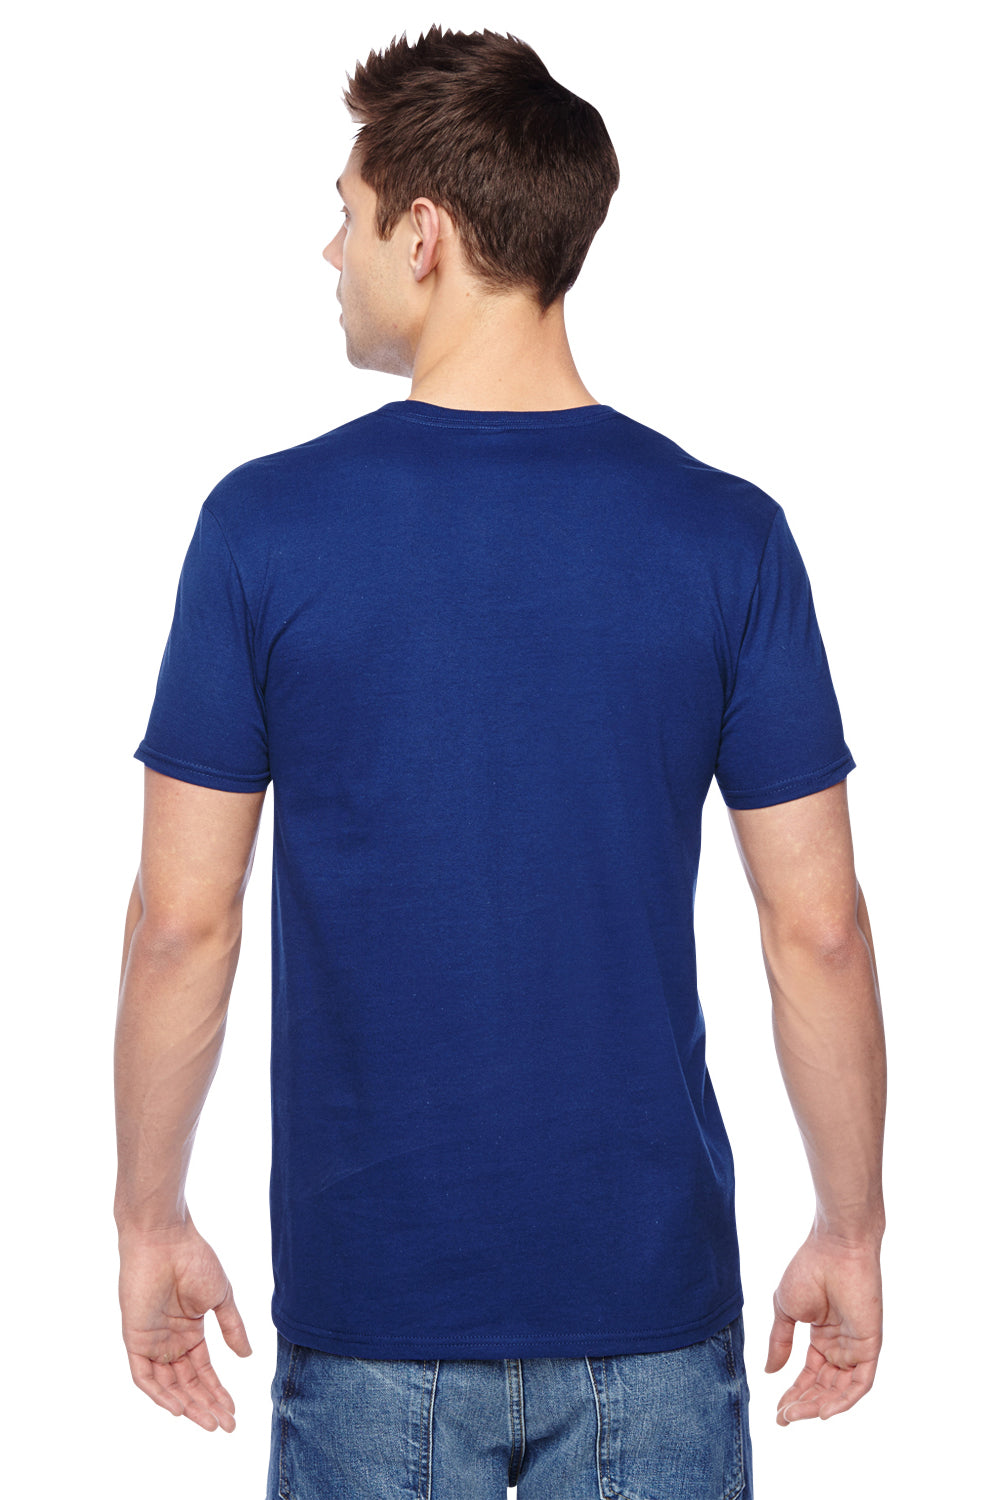 Fruit Of The Loom SF45R Mens Sofspun Jersey Short Sleeve Crewneck T-Shirt Admiral Blue Back